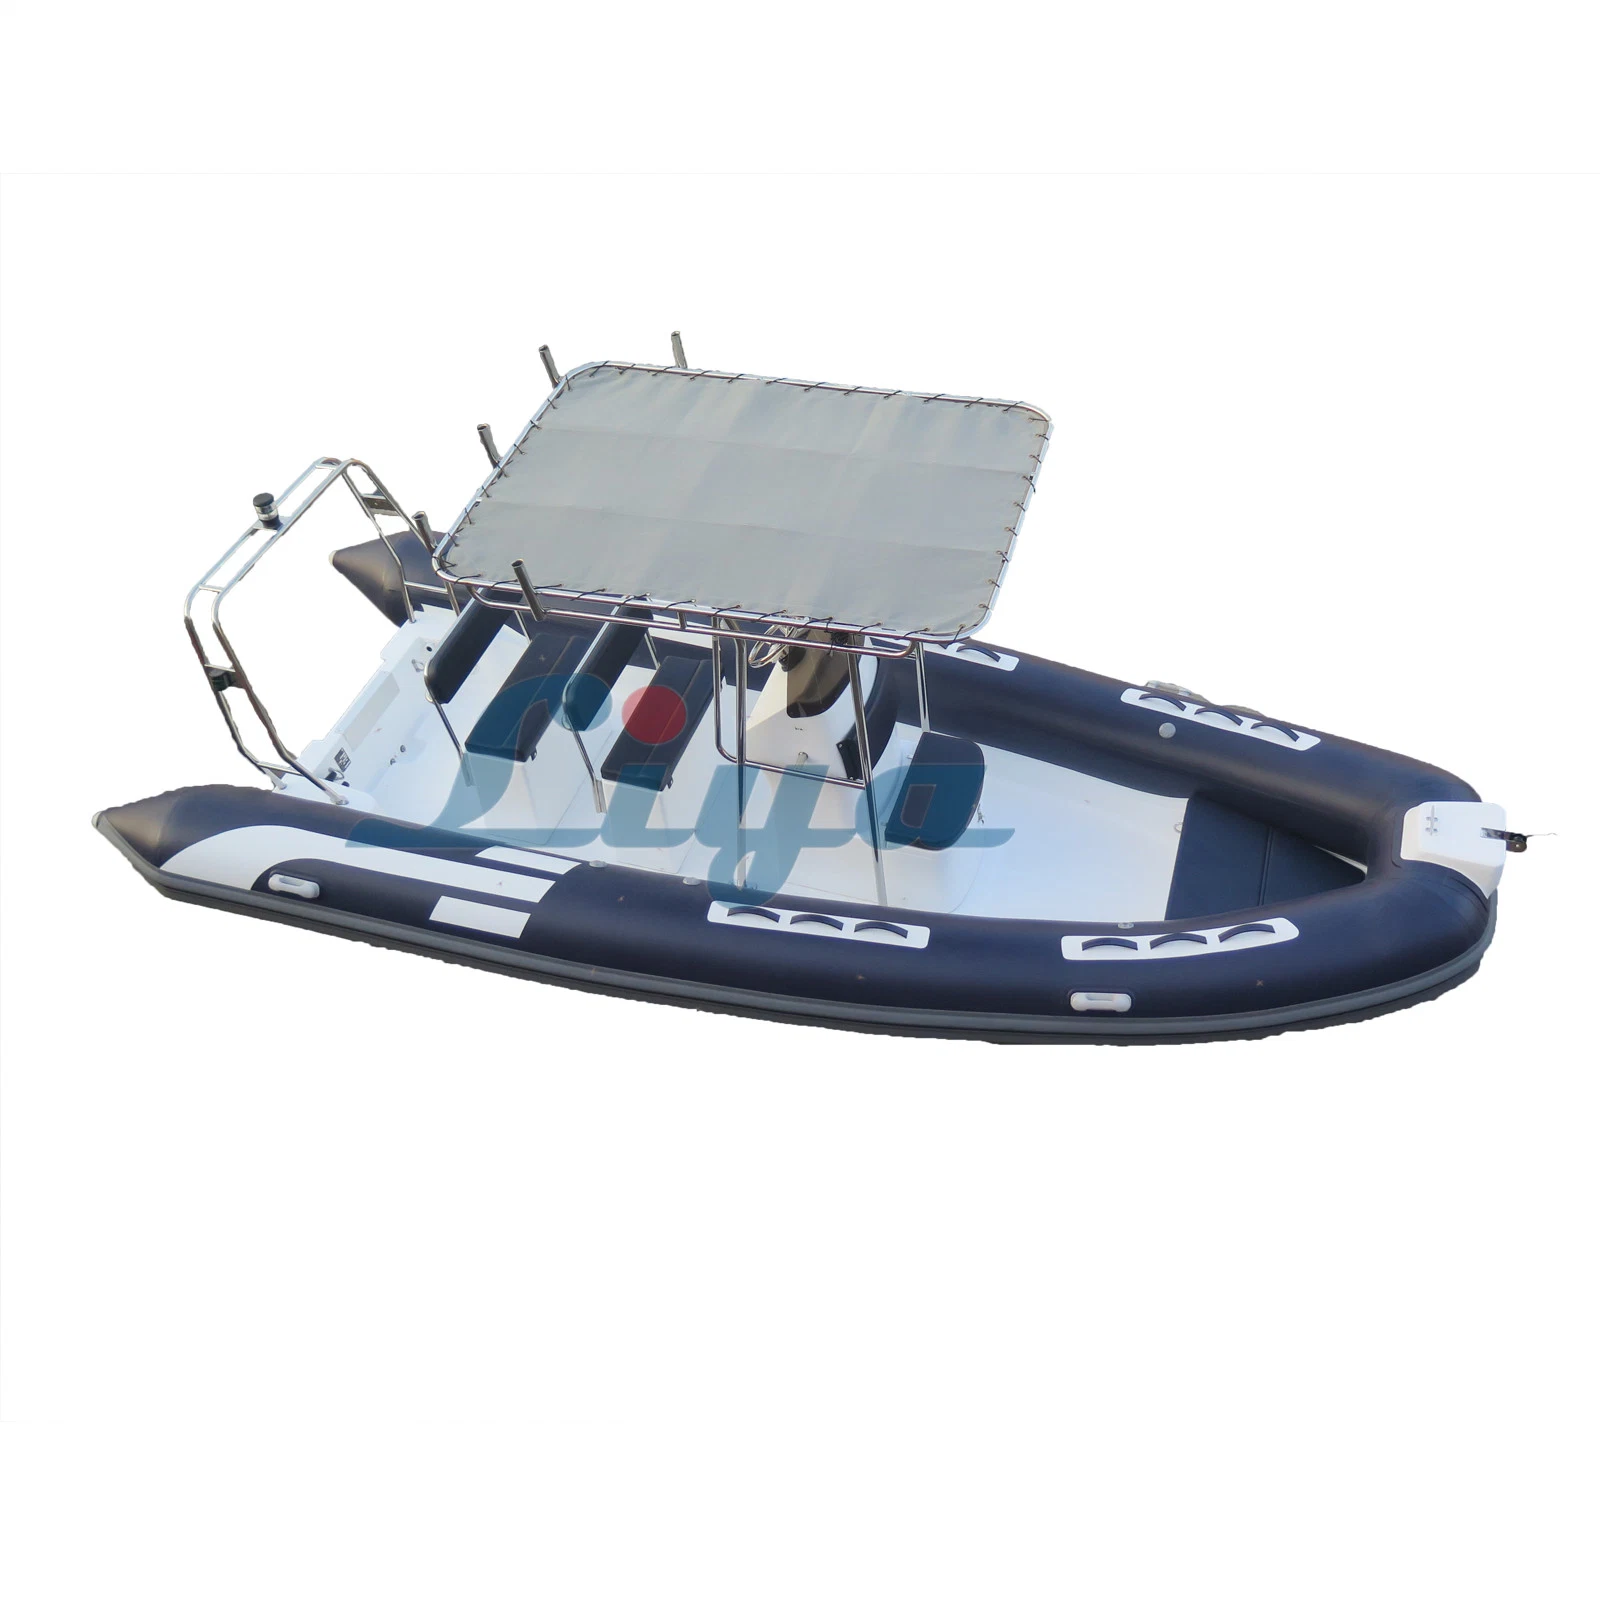 Liya 2.4-5.2m Rib Inflatable Boats Rib Dinghy Leisure Boats